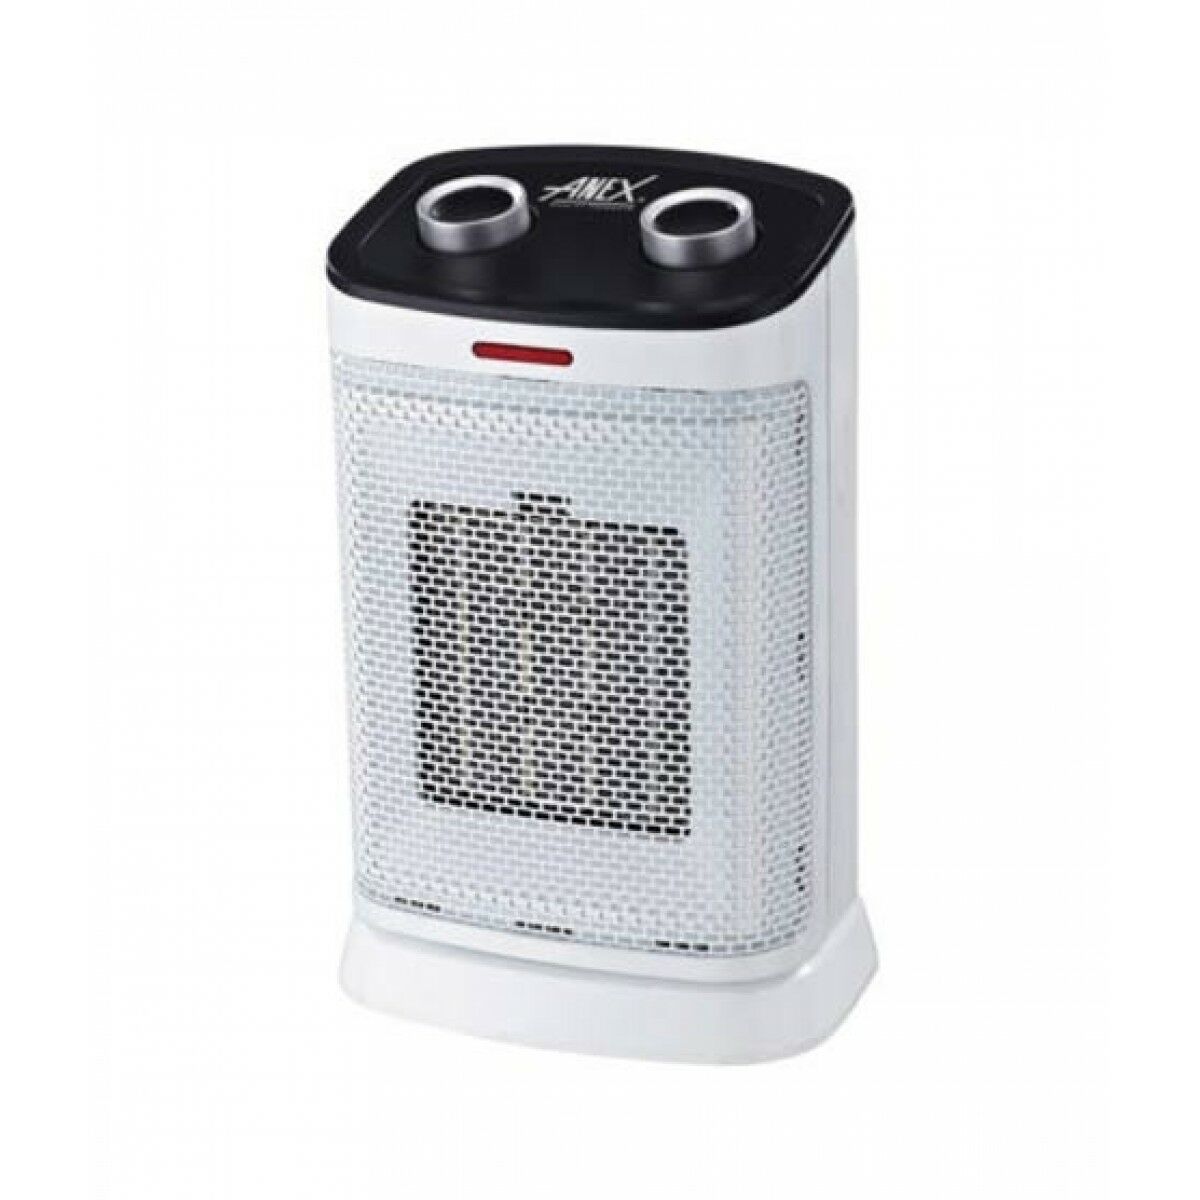 Anex Home Appliances Fan Heater - AG-5007 Heater